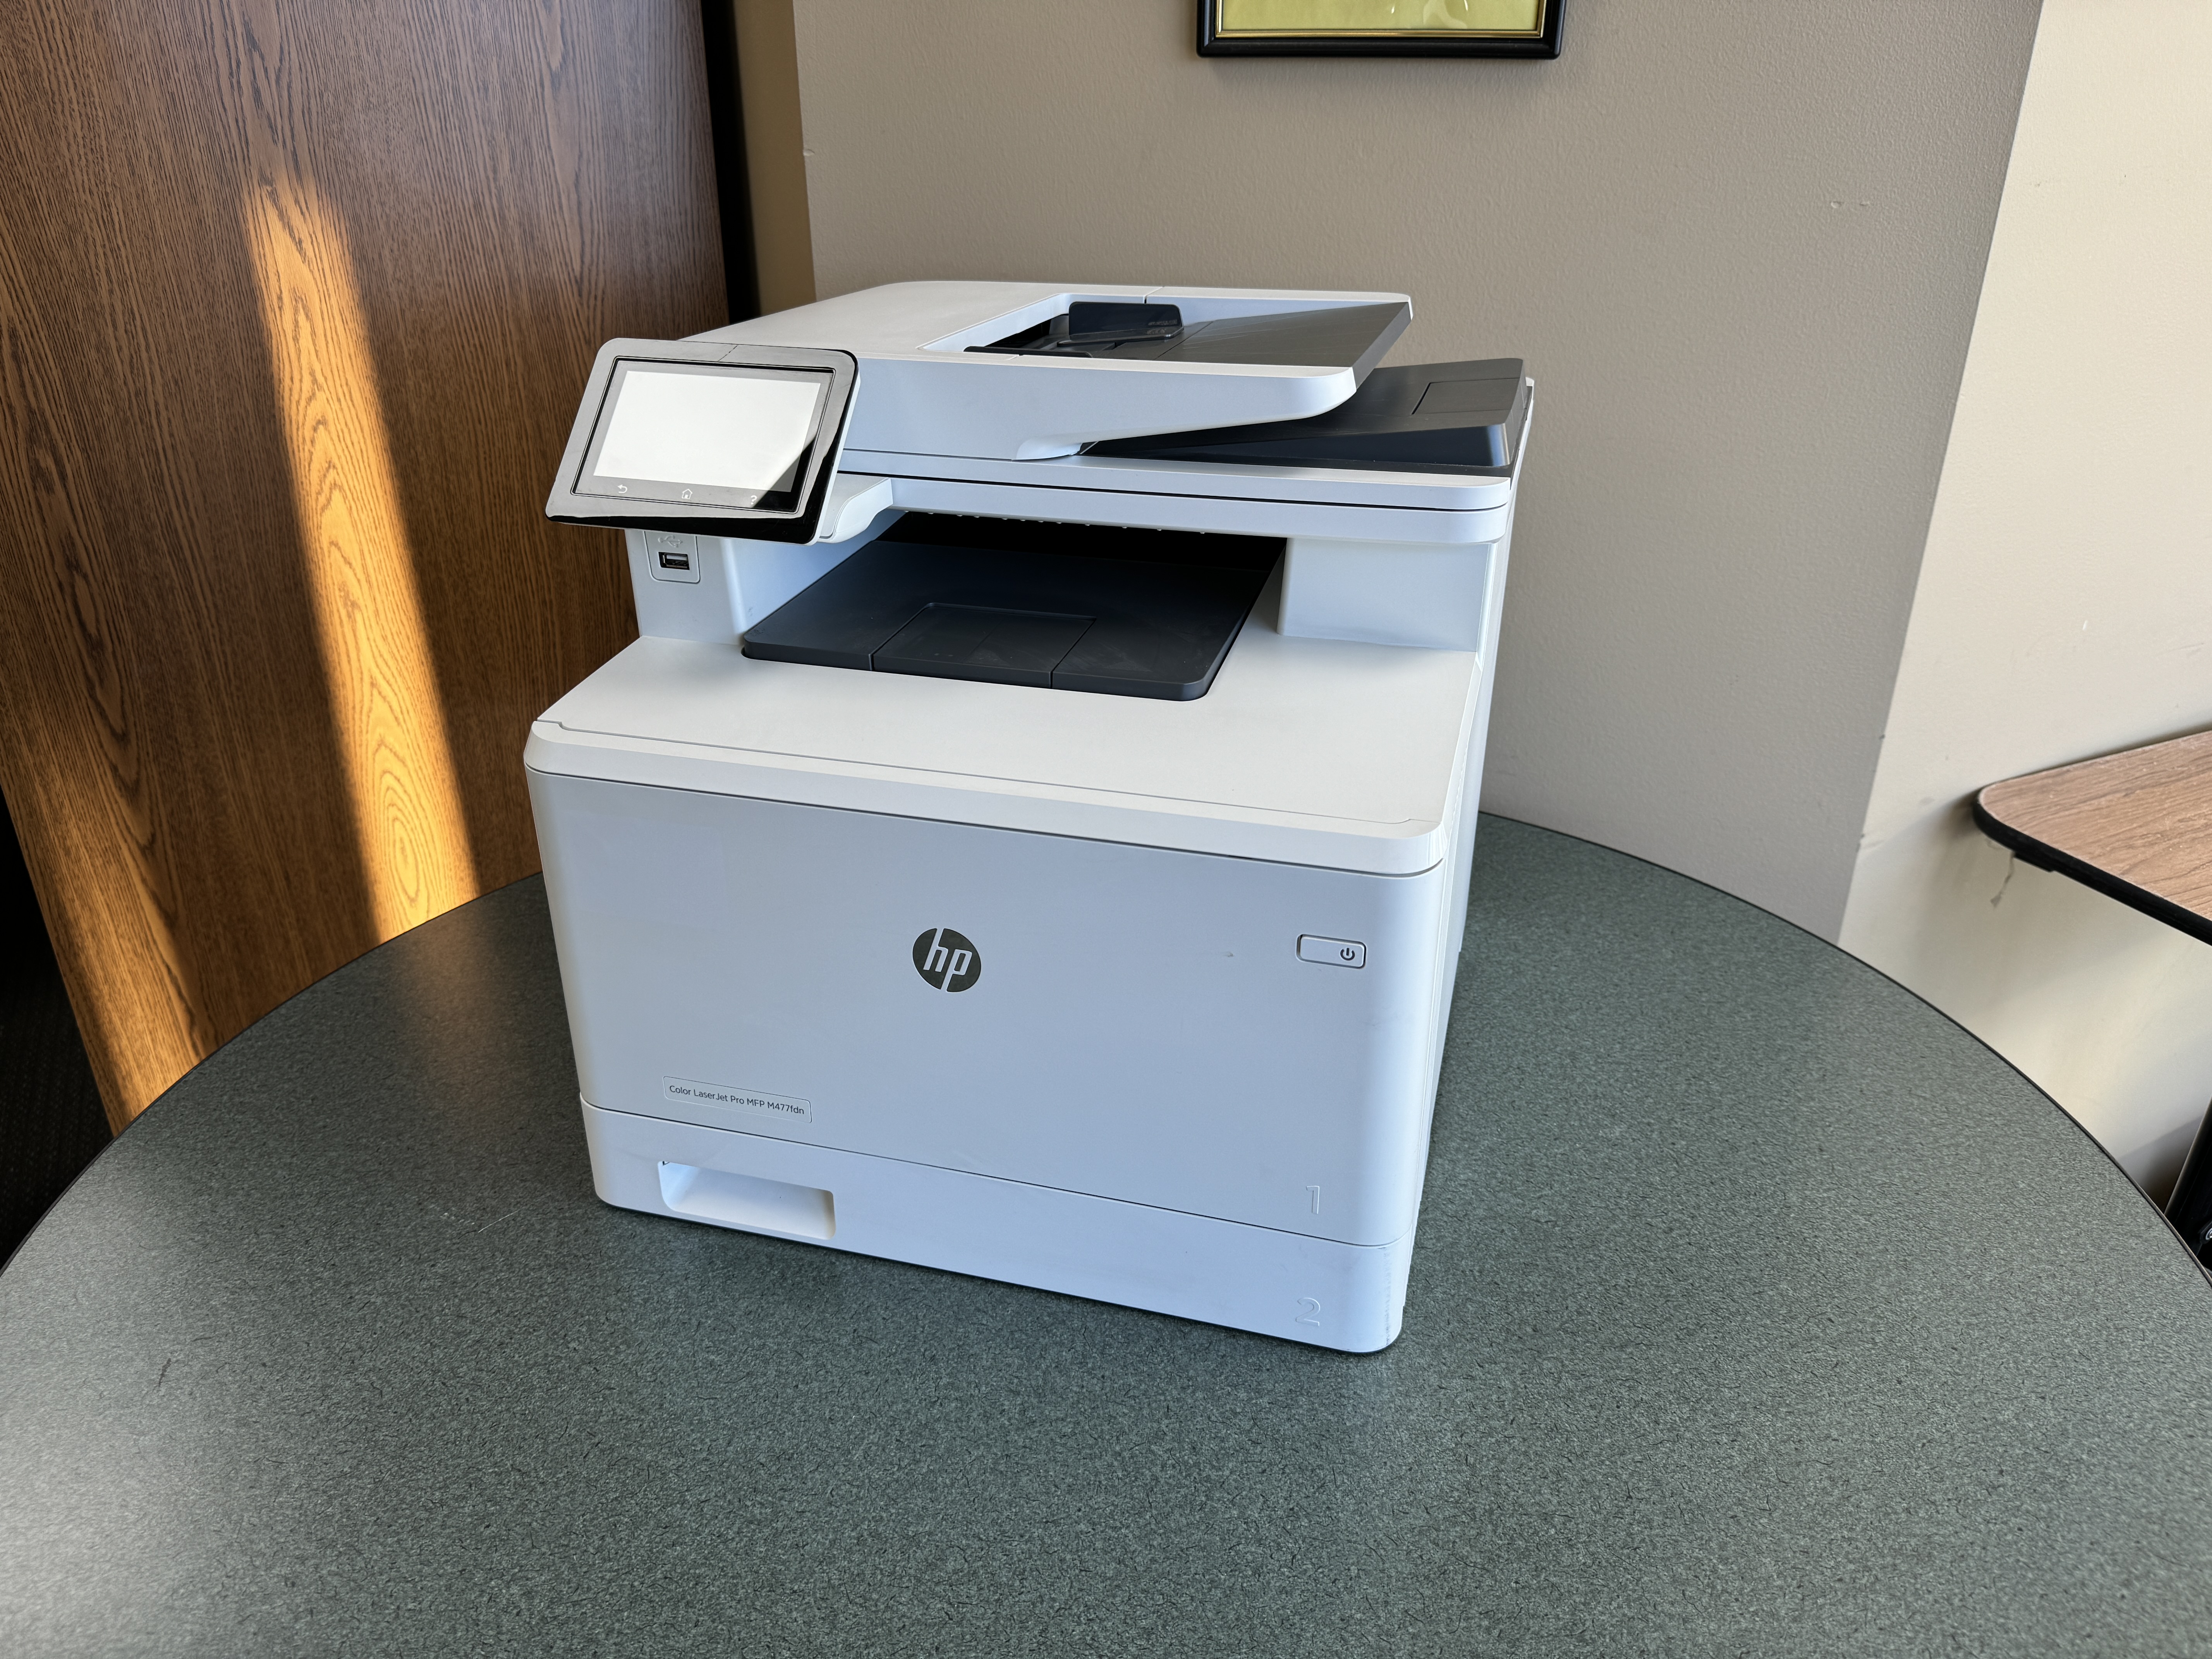 HP M477 desktop color copier rental. 